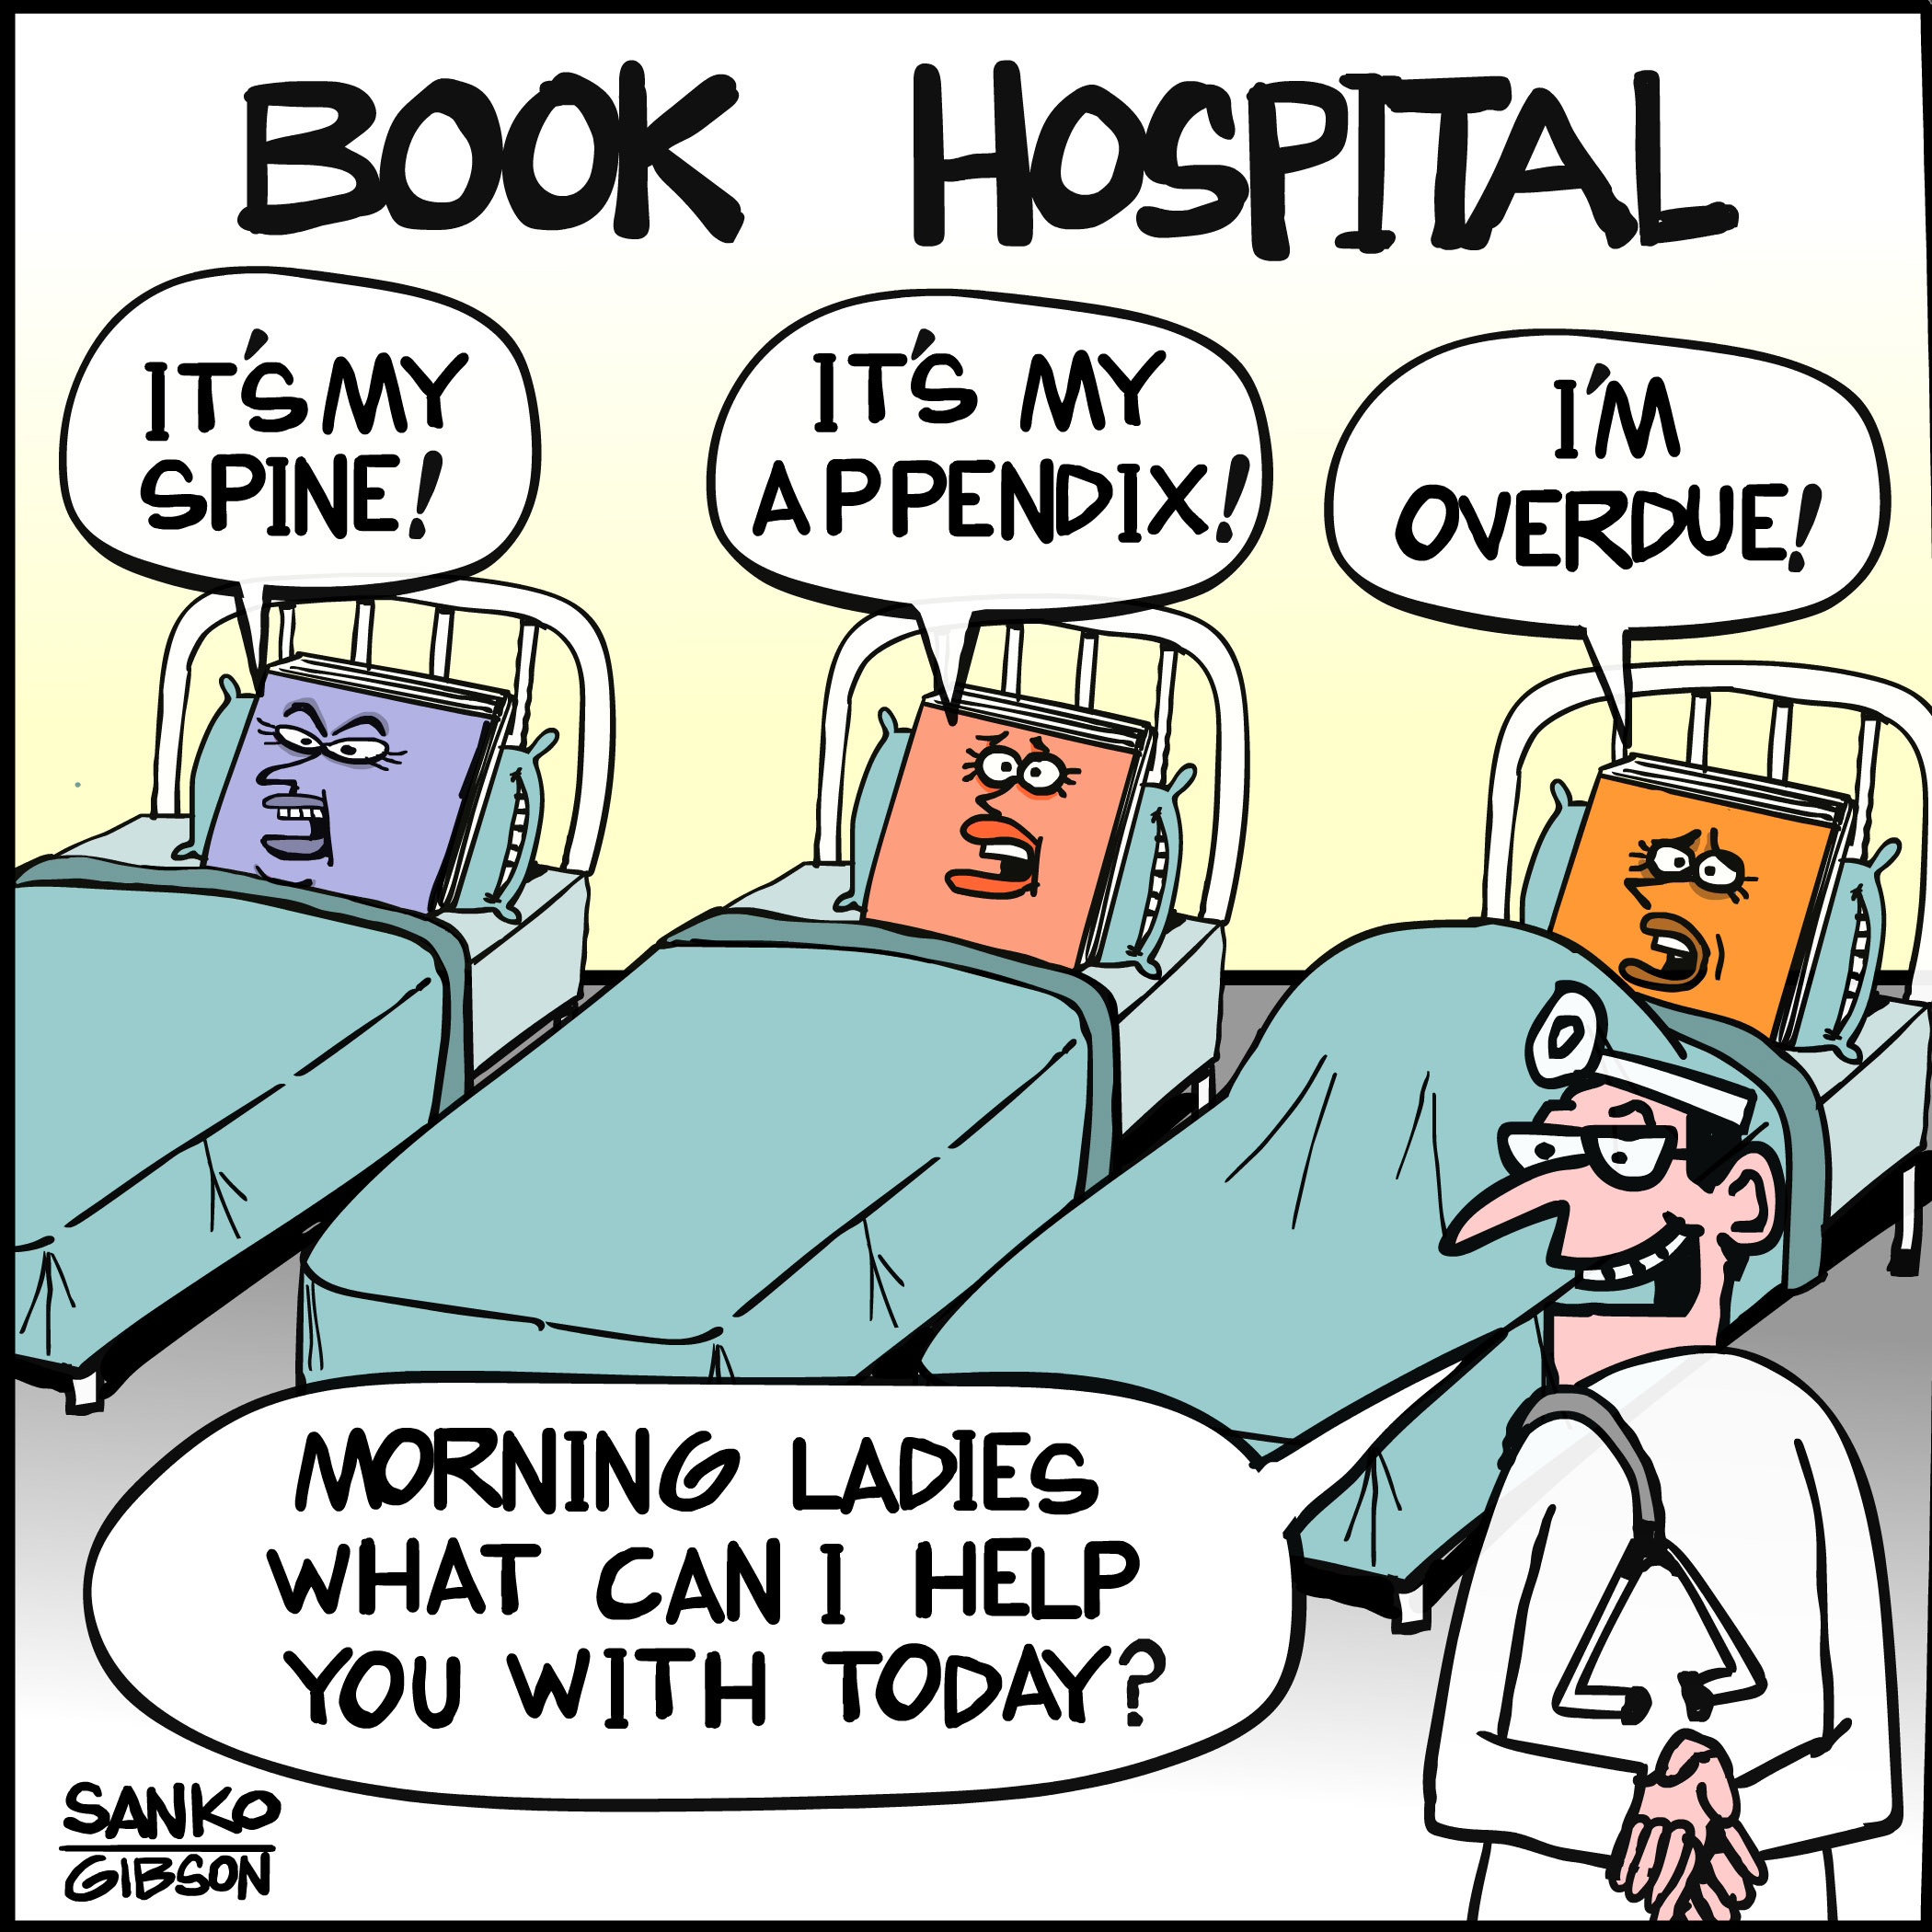 Book Hospital